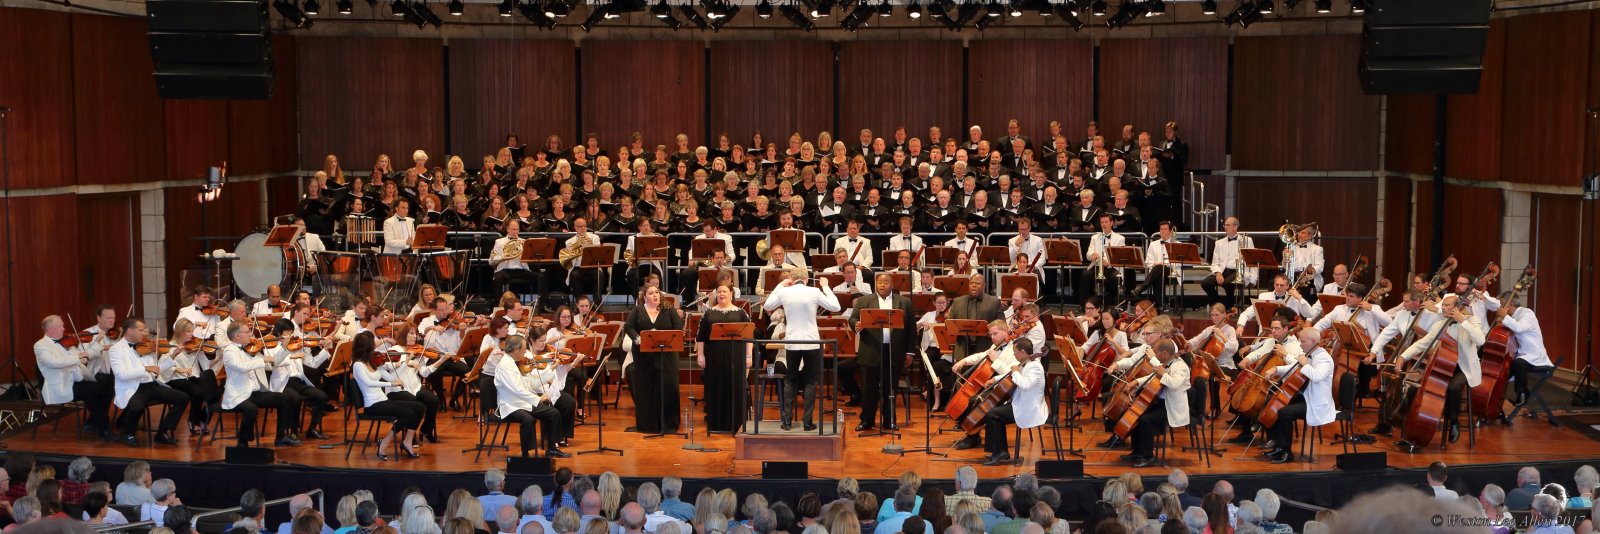 photo of chorus and orchestra